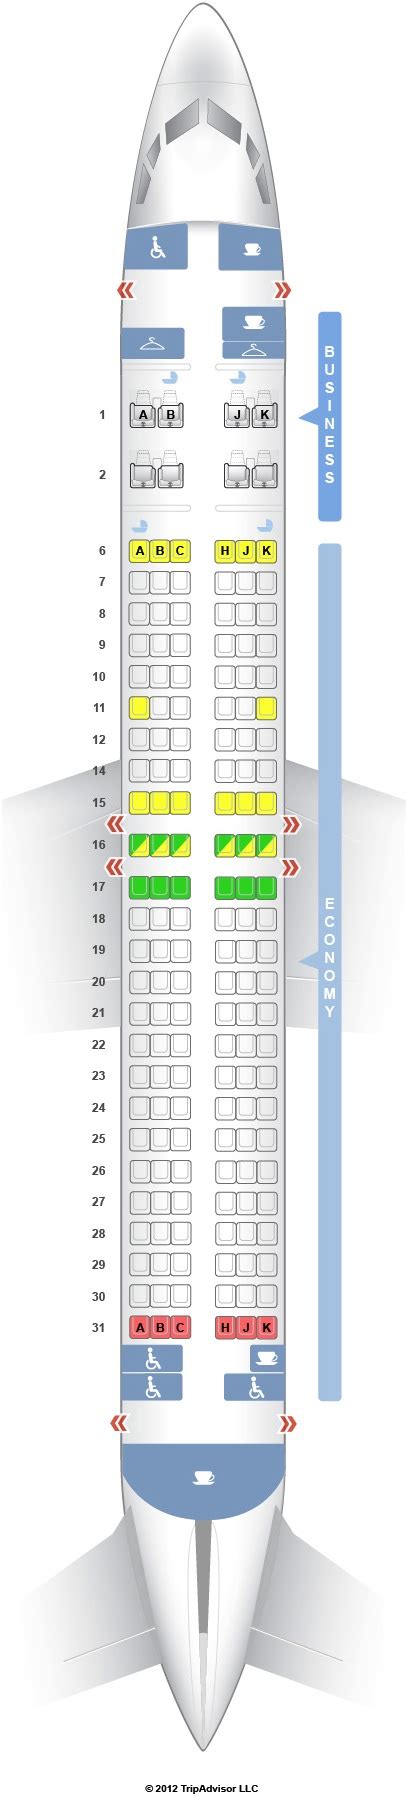 Seatguru Seat Map China Airlines Boeing 737 800 738